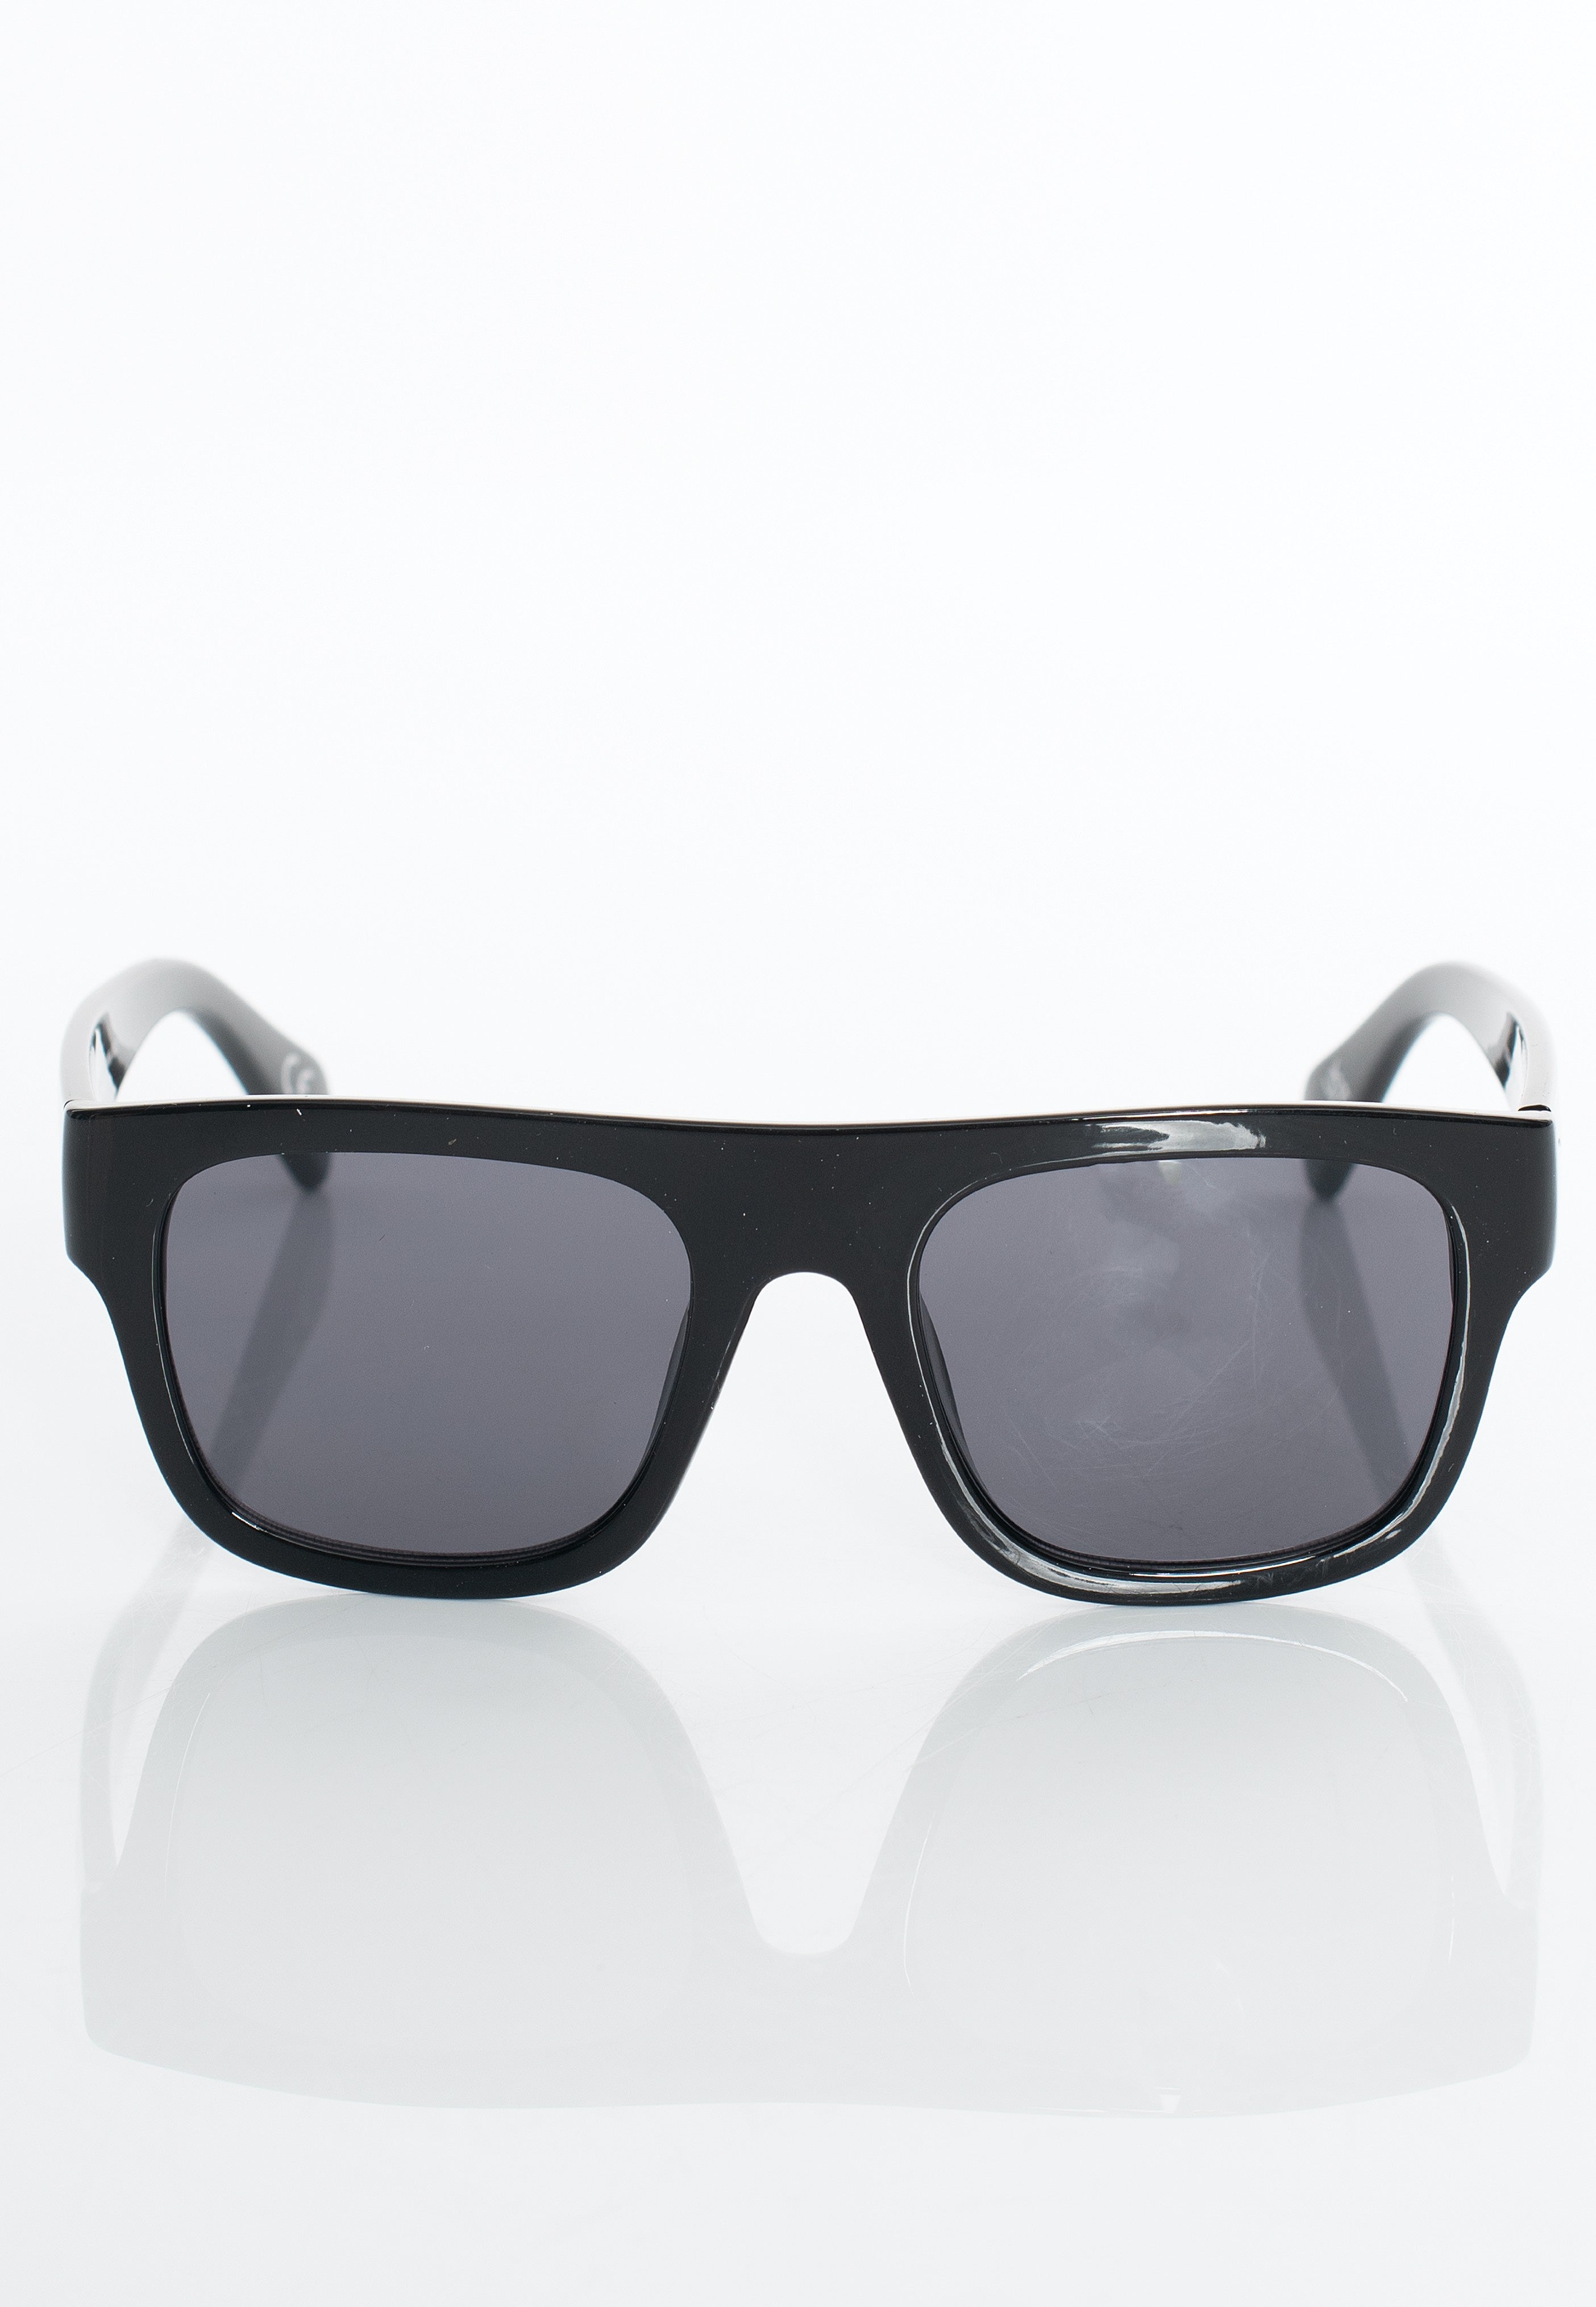 Vans - Squared Off Shades Black - Sunglasses